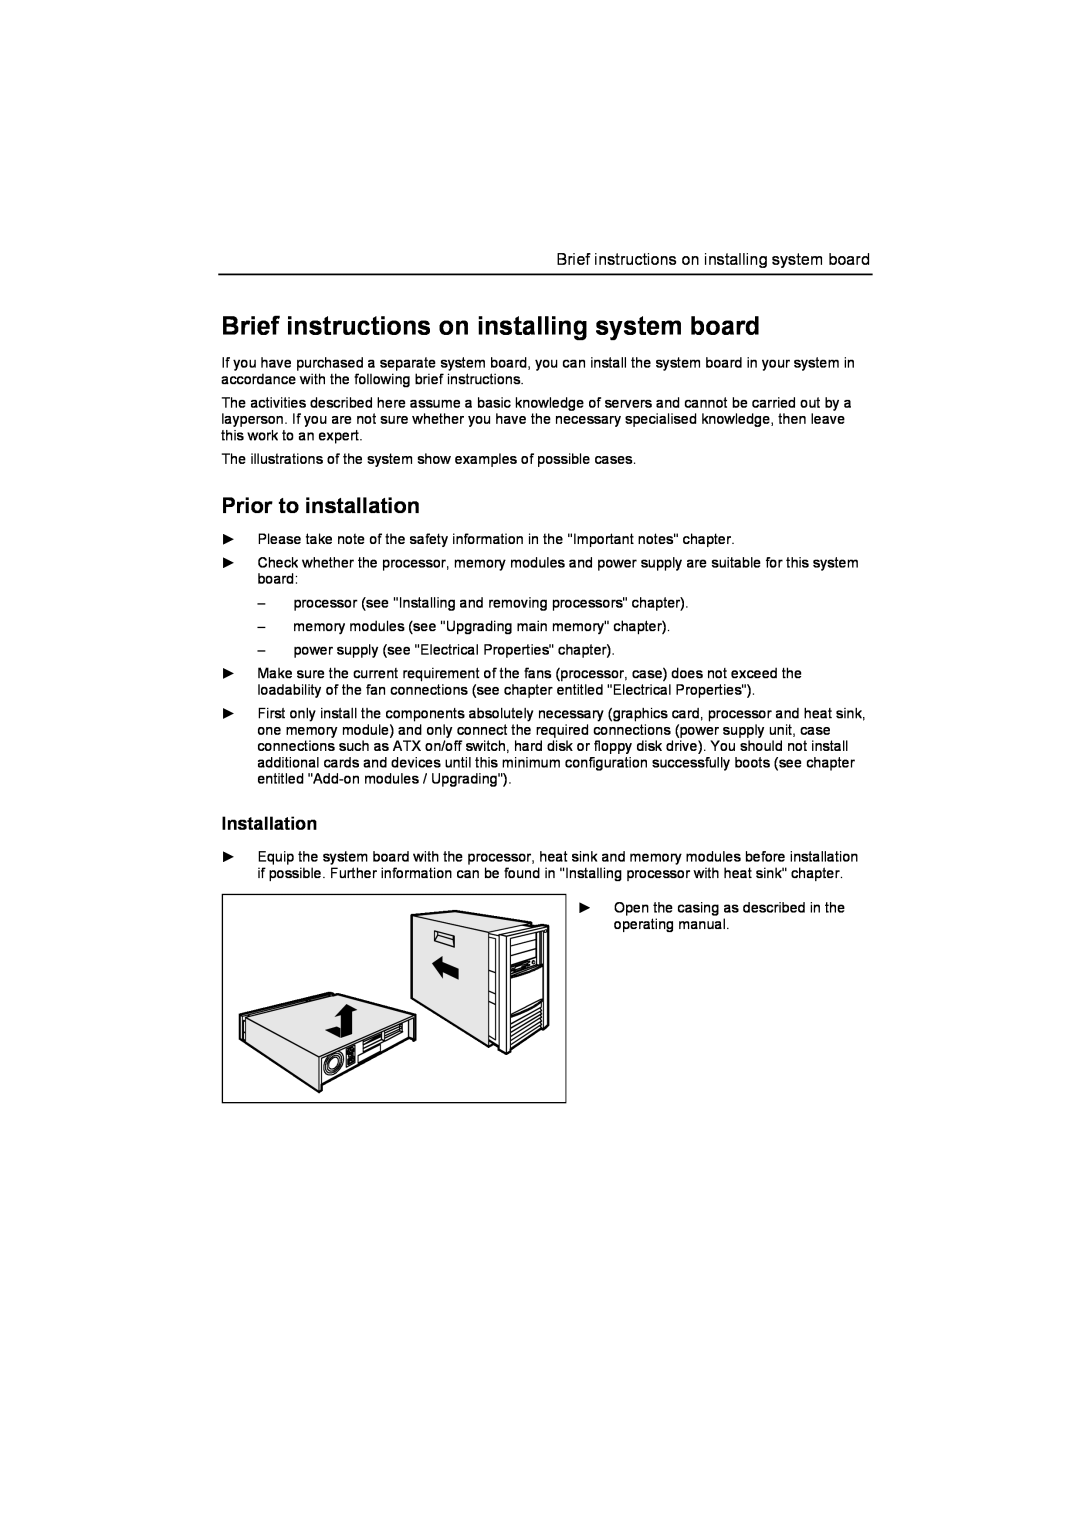 Fujitsu D1859 technical manual Brief instructions on installing system board, Prior to installation, Installation 